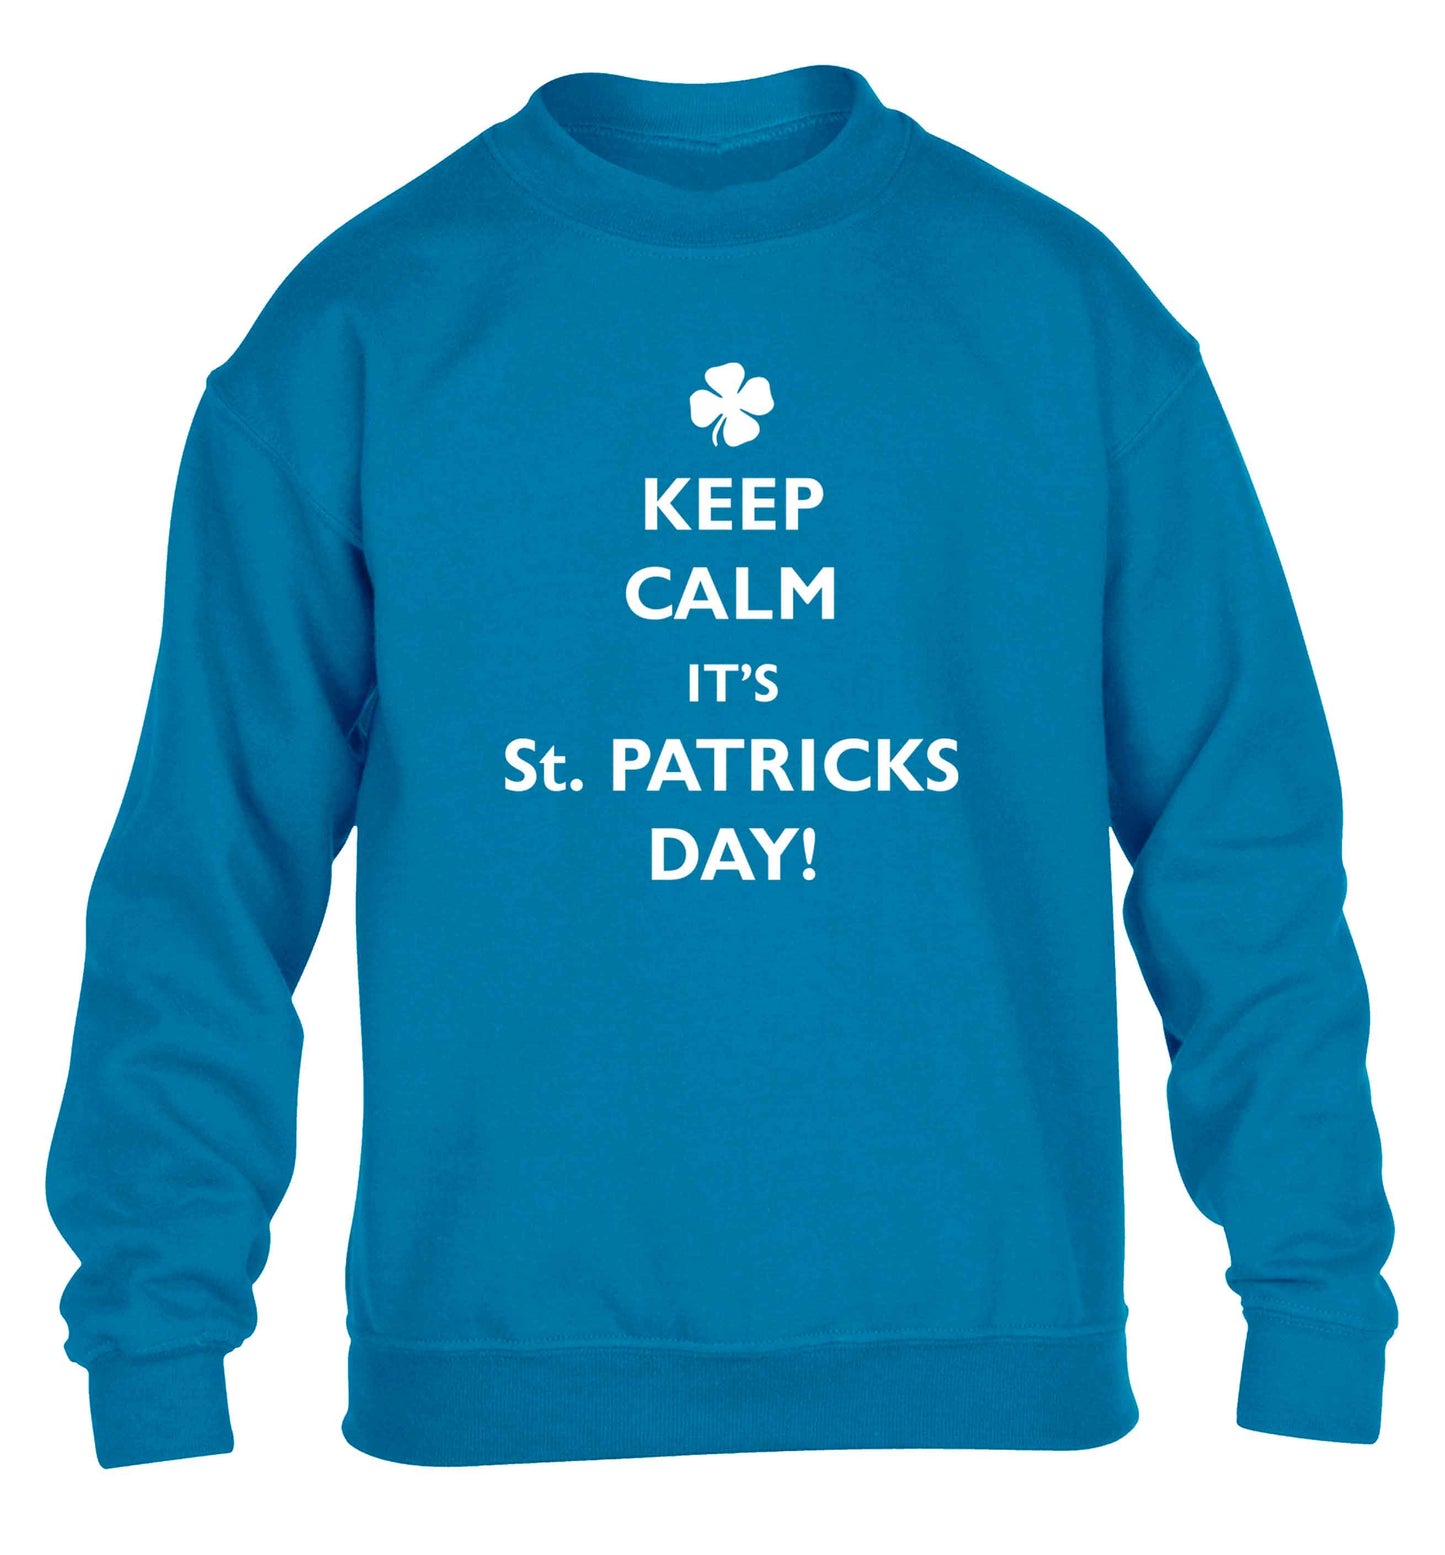 Keep calm it's St.Patricks day children's blue sweater 12-13 Years